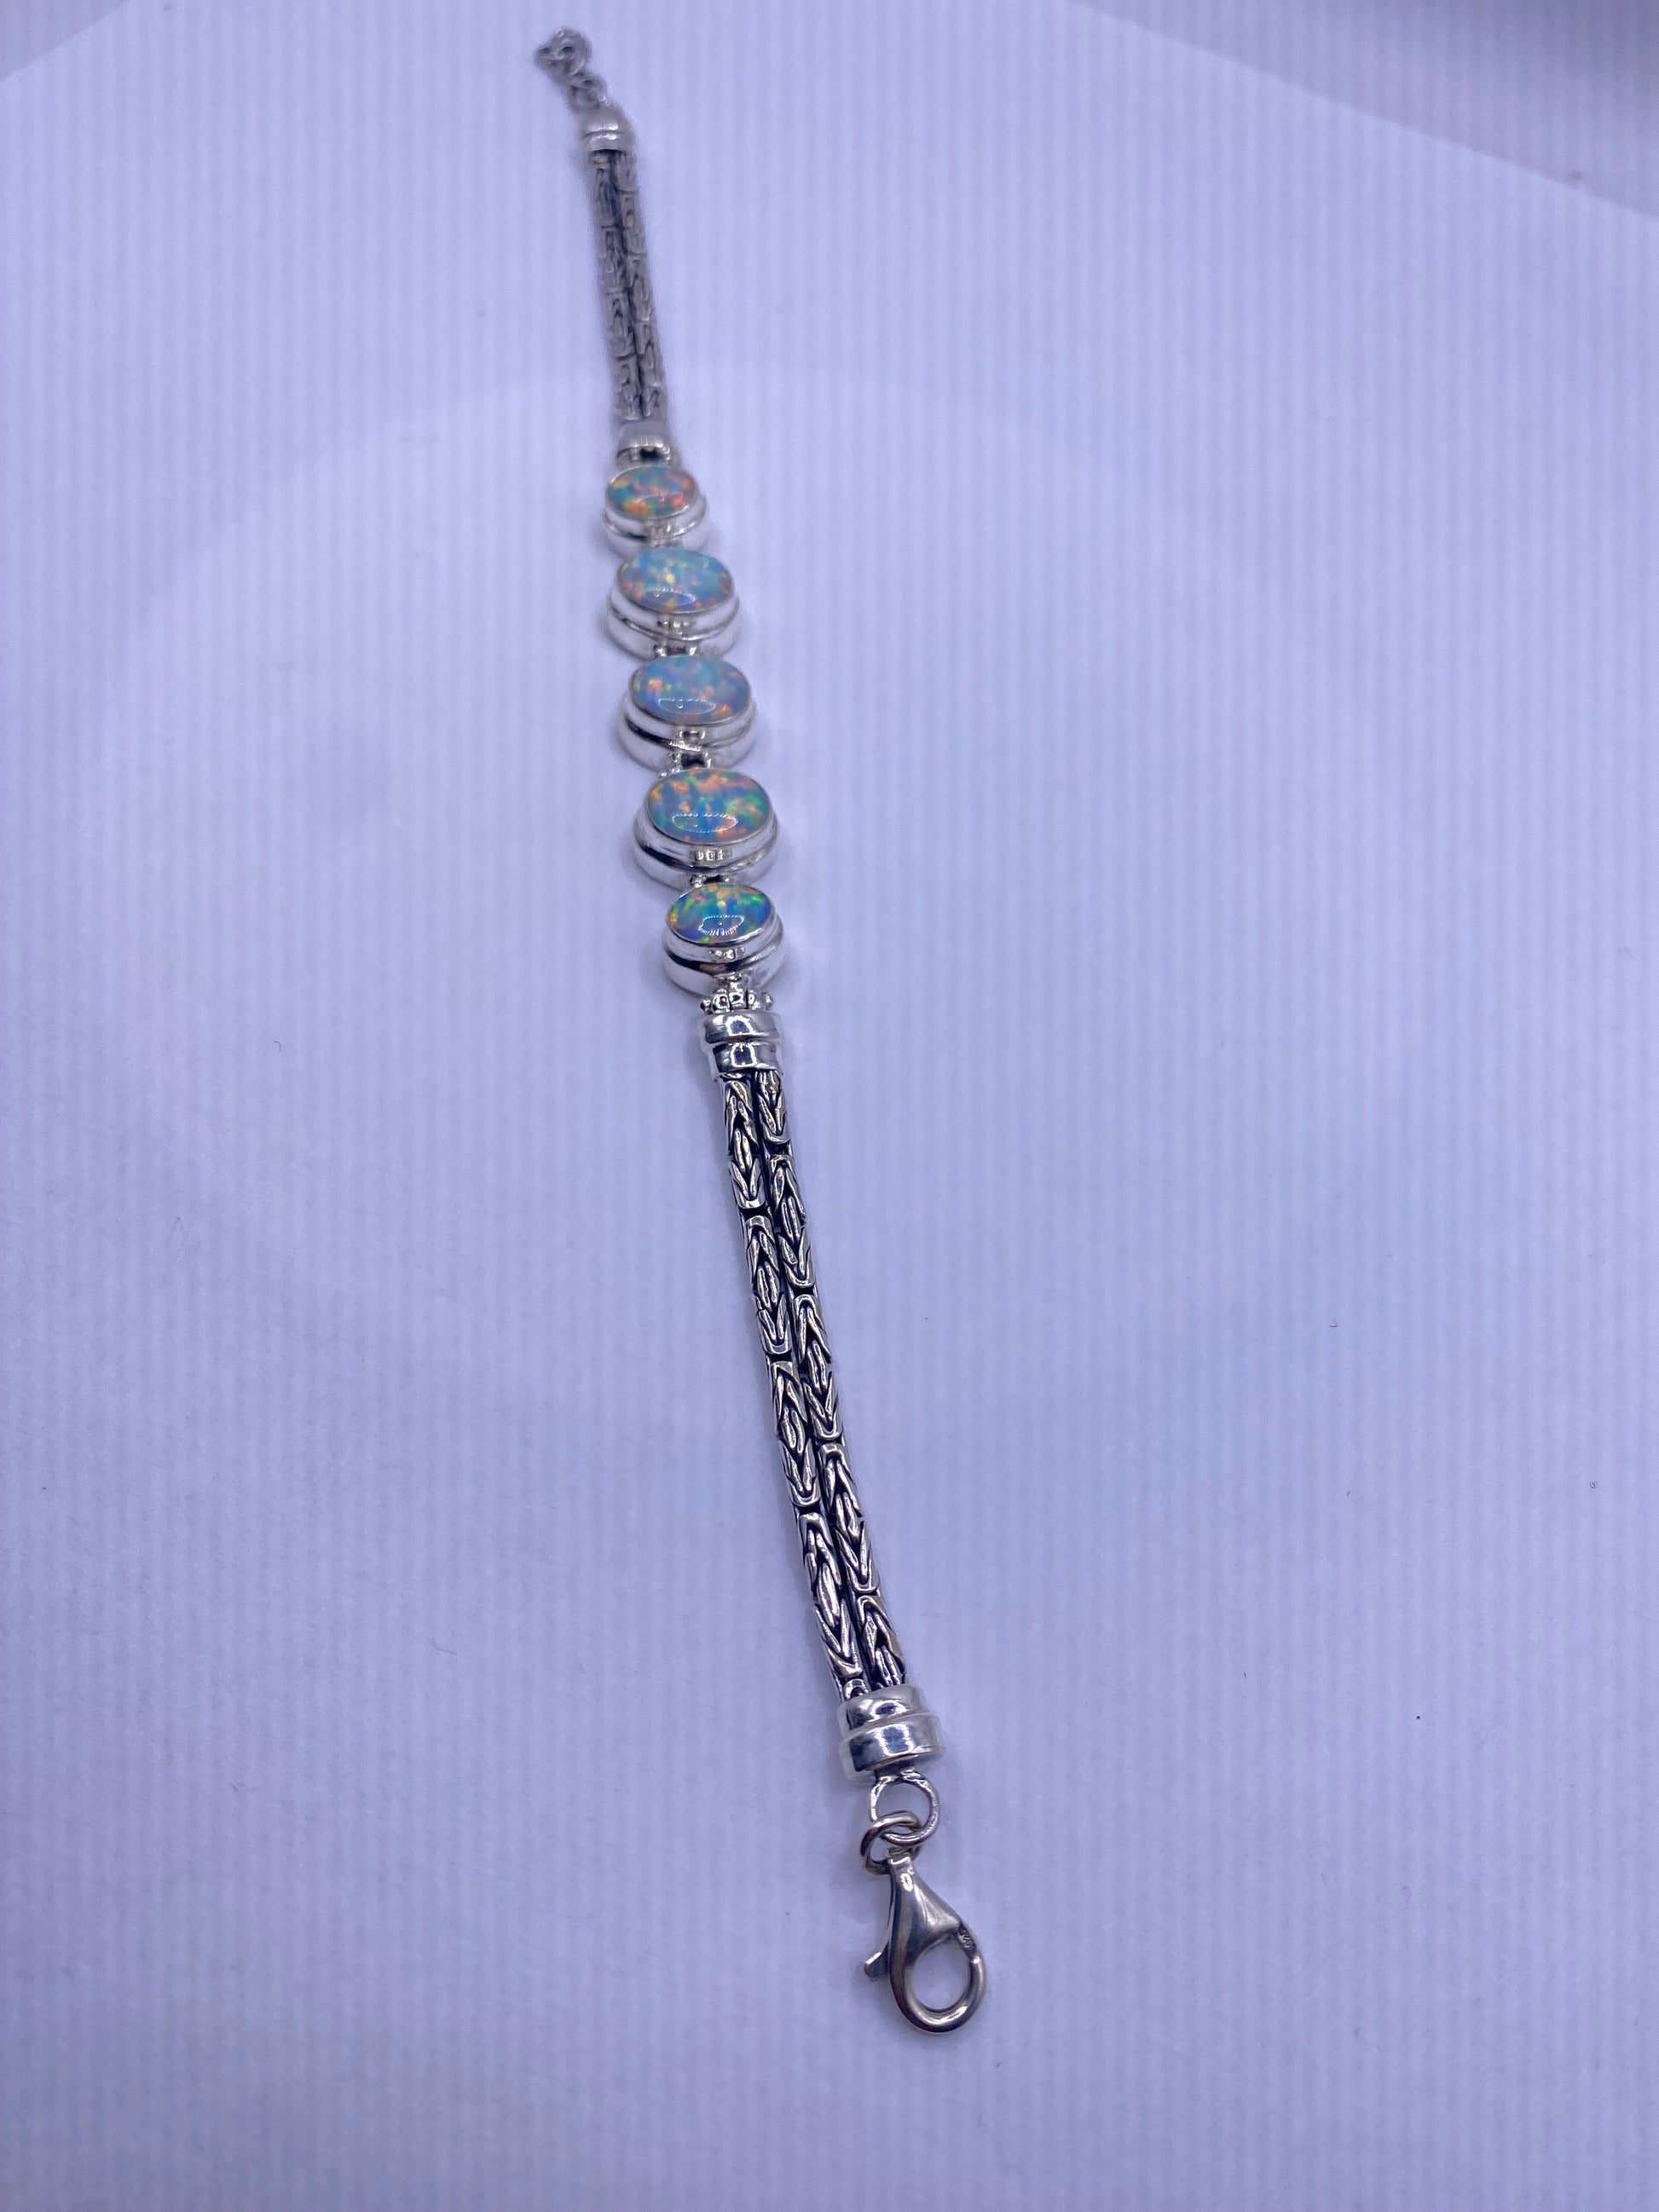 Vintage Blue Fire Opal Bracelet inlay 925 Sterling Silver